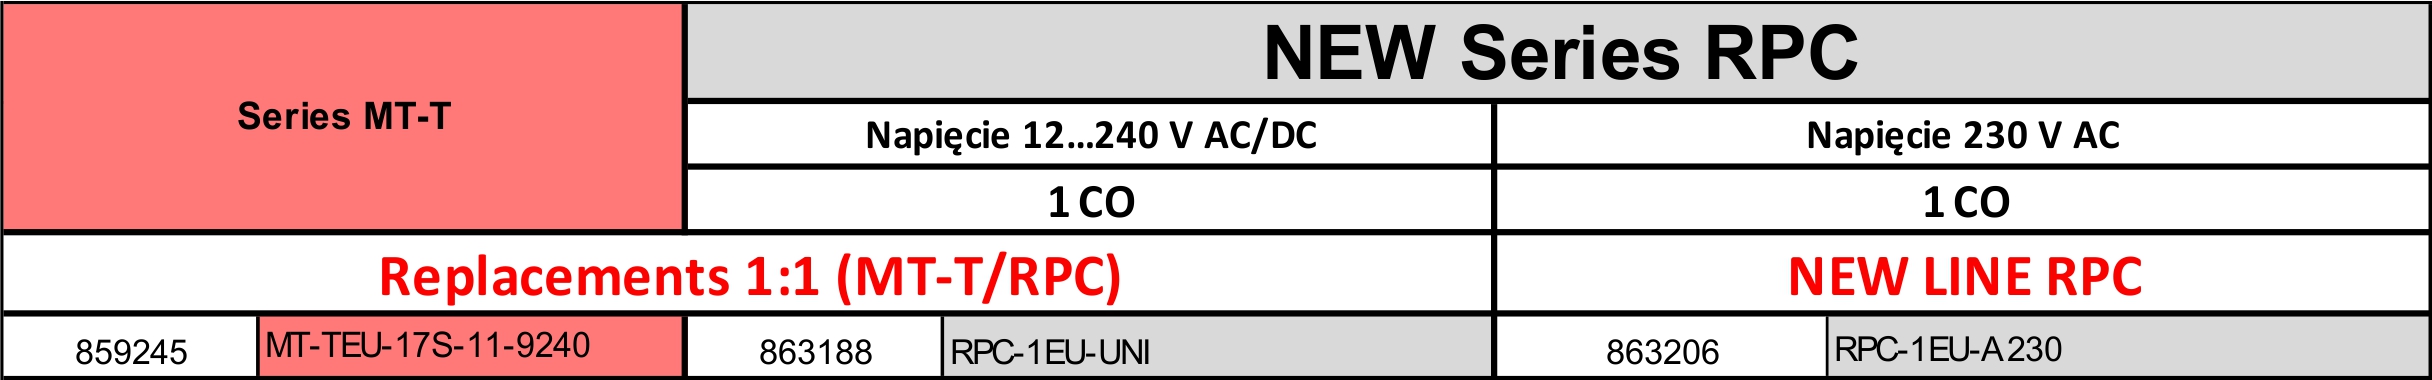 eRPC-EU